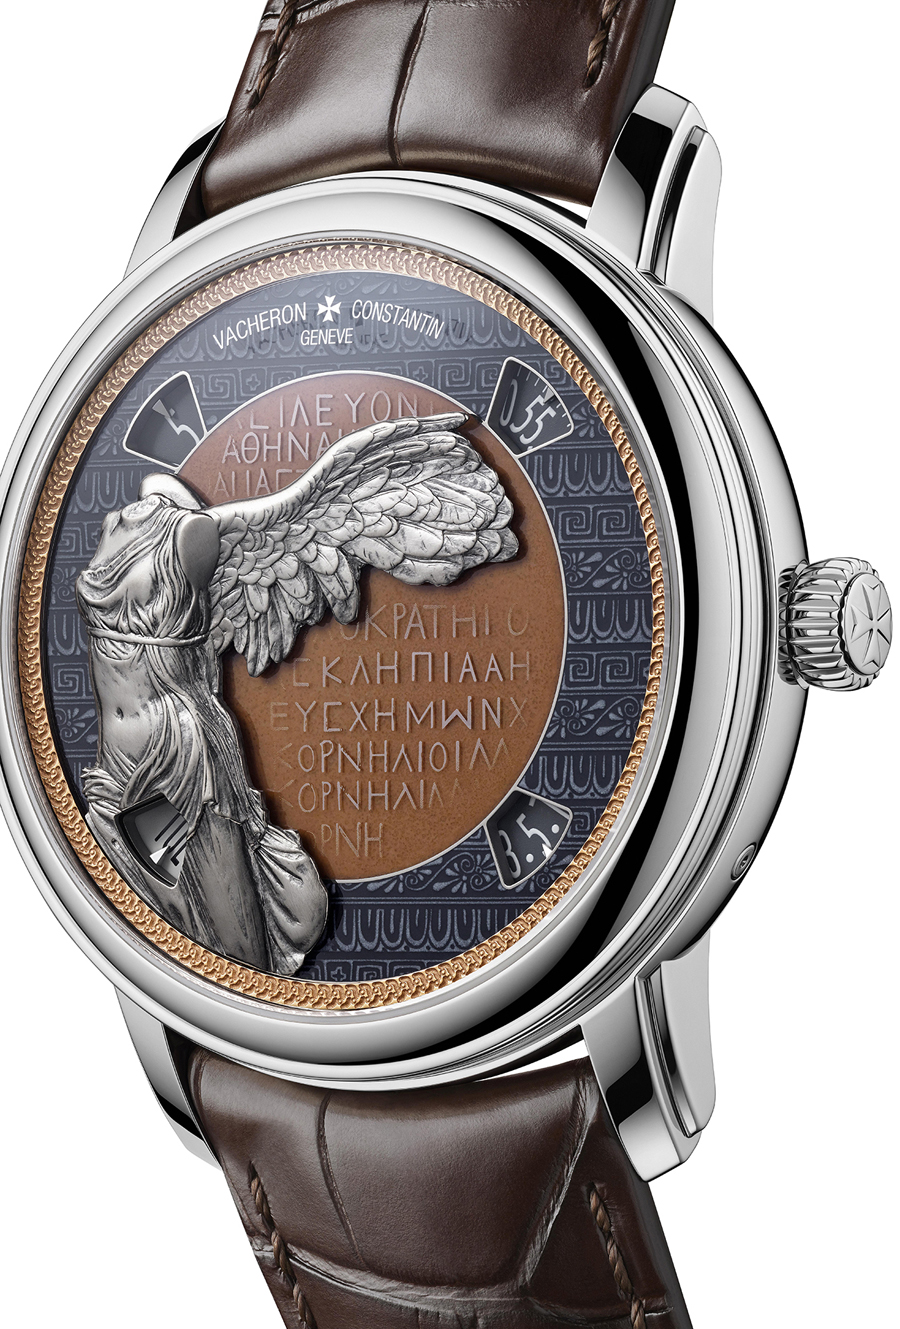 Victoire de Samothrace Vacheron Constantin timepiece